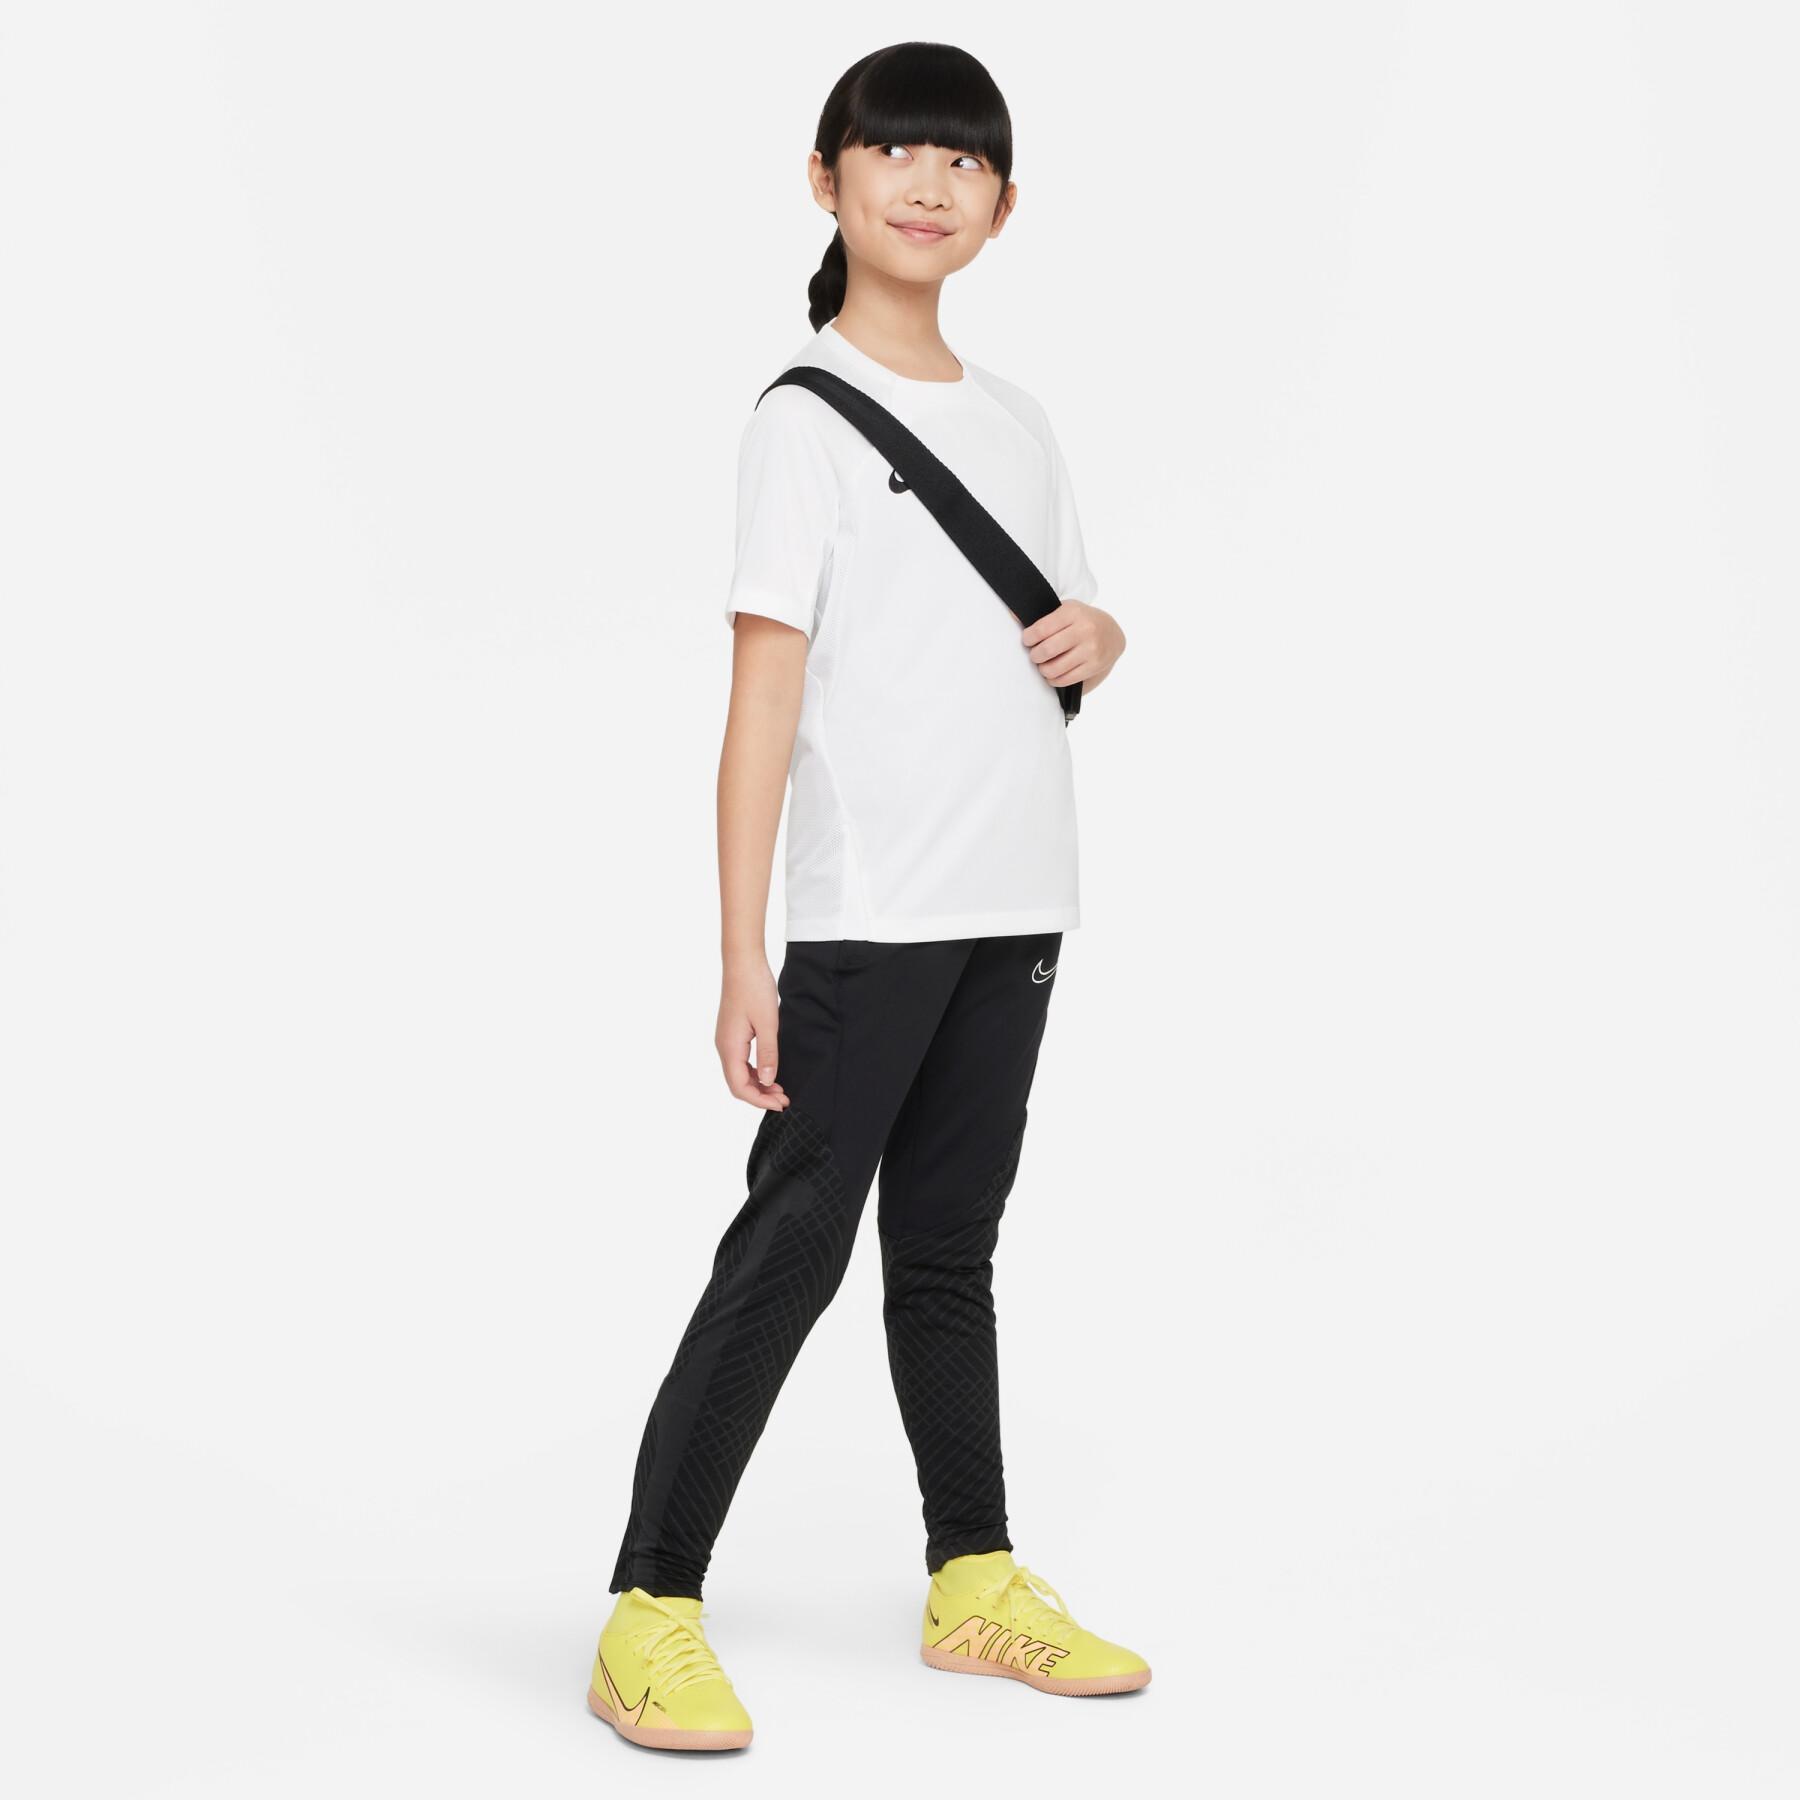 Camiseta para niños Nike Dri-Fit Strike III